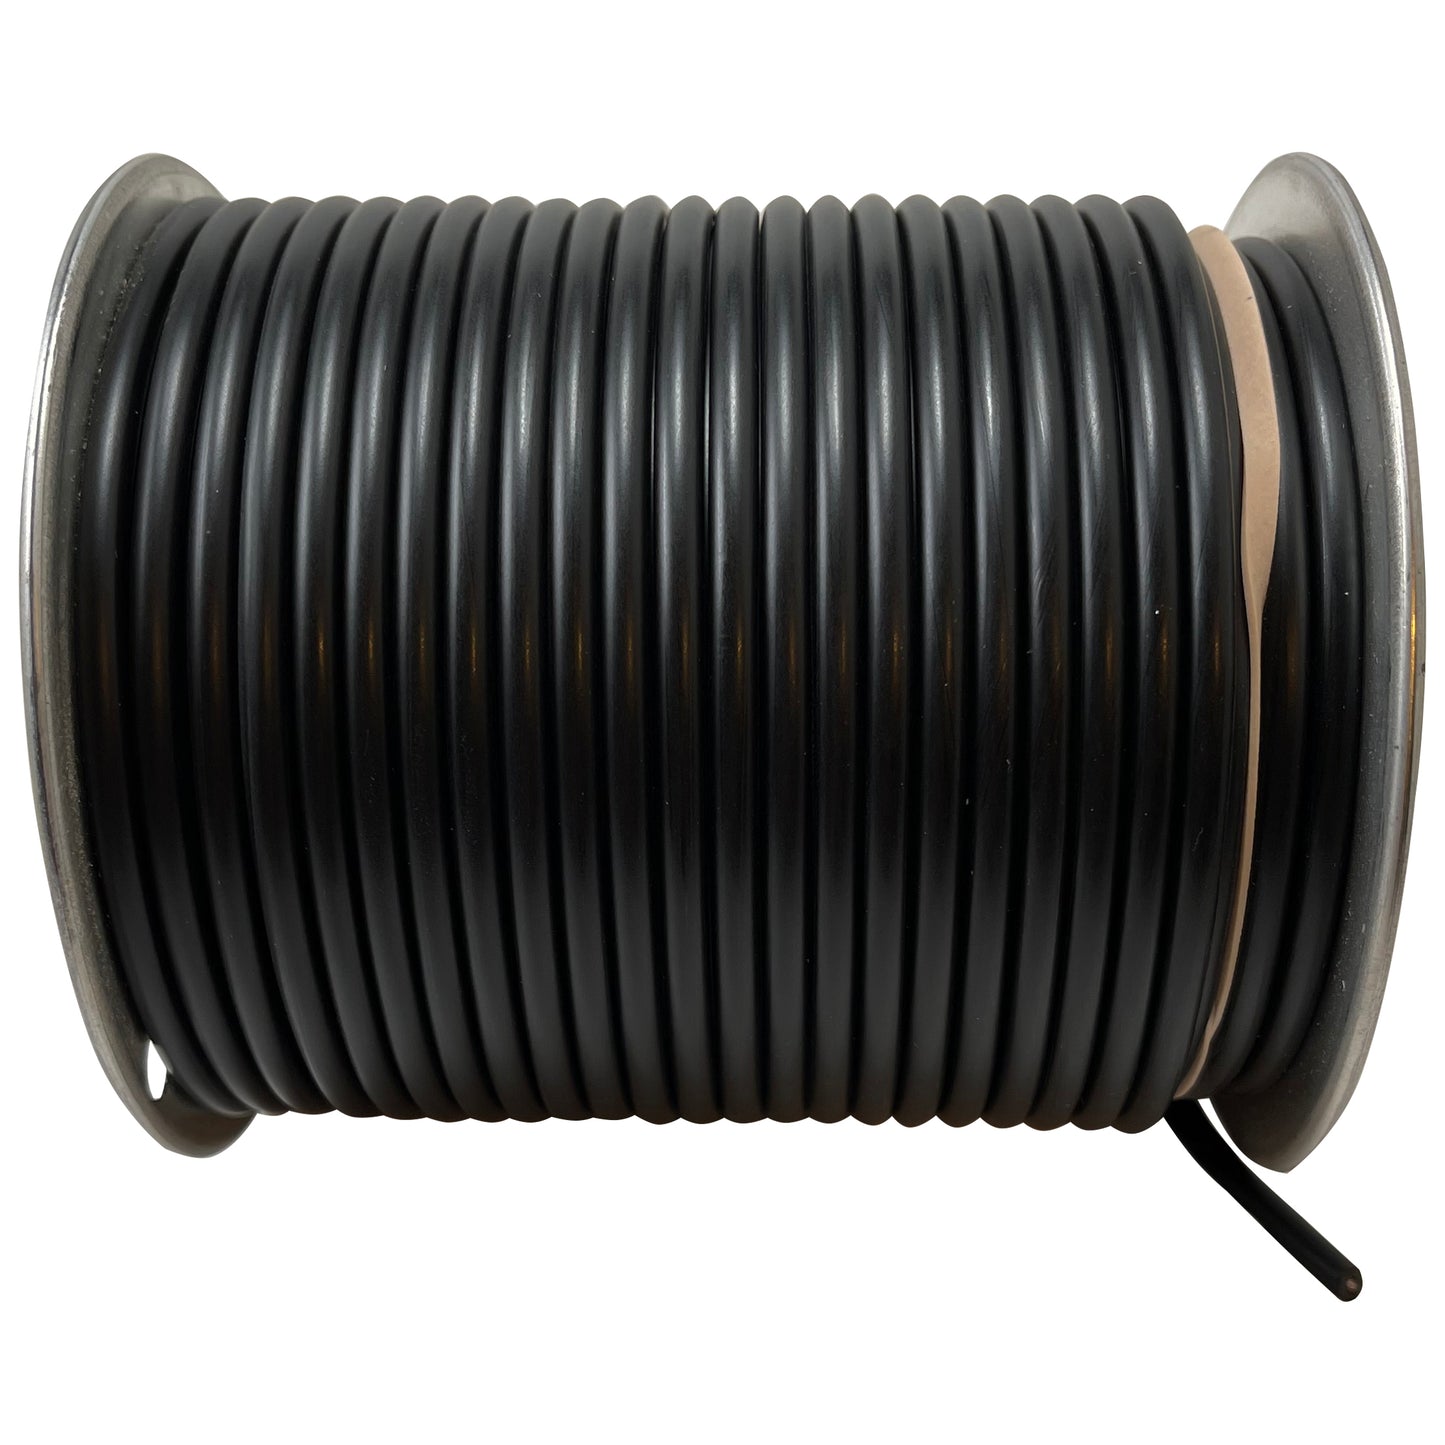 18 Gauge Universal Automotive Fusible Link Wire - 100' FT Spool